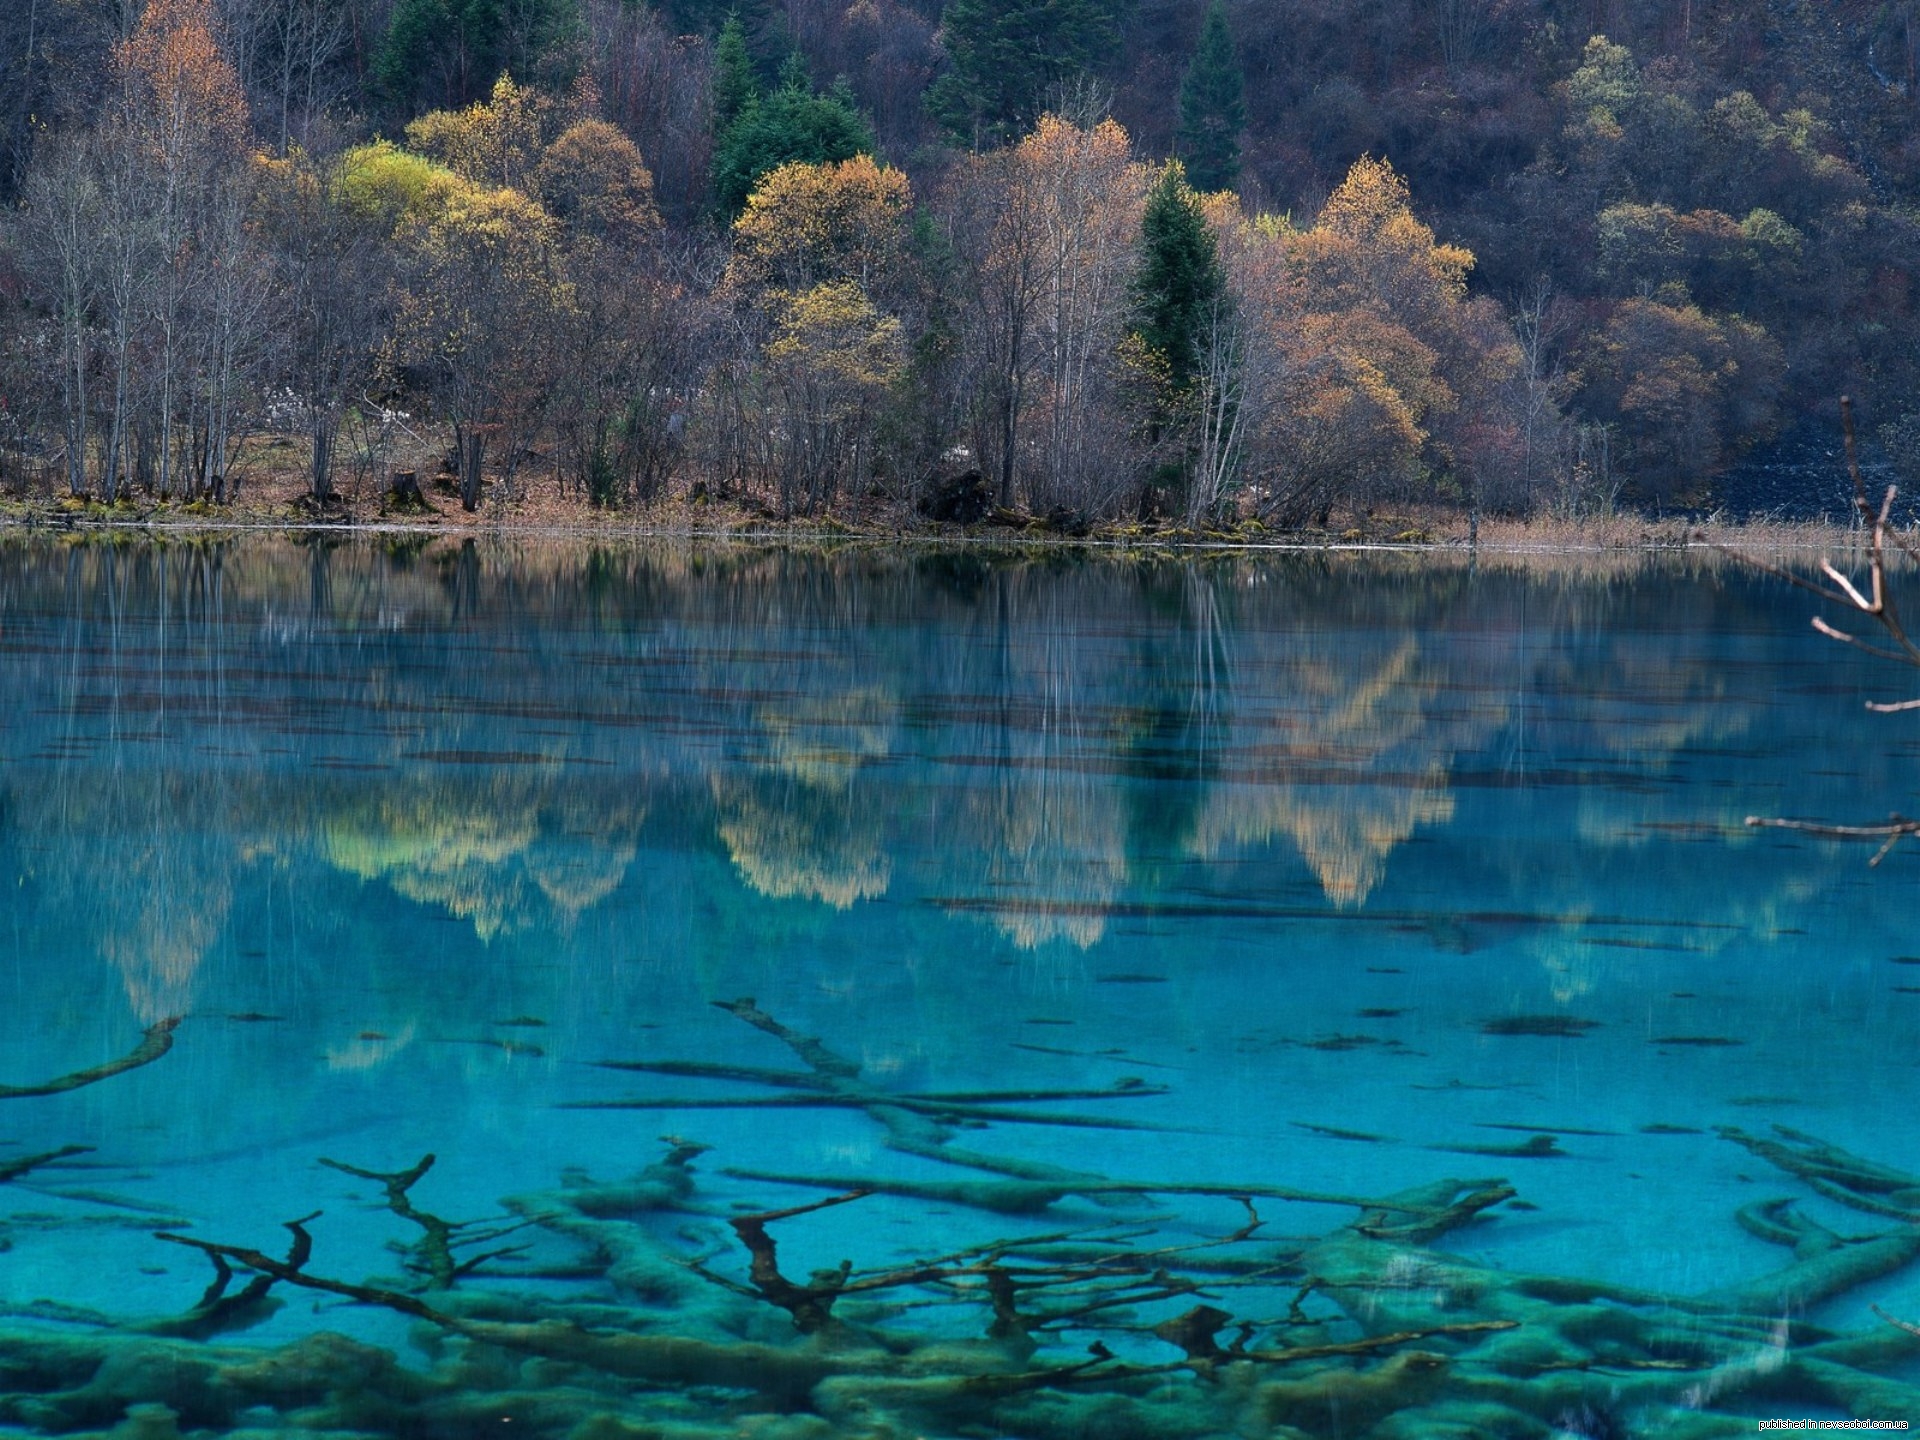 Голубая река. Национальный парк Цзючжайгоу. Бирюзовое озеро, национальный парк Цзючжайгоу, Китай. Национальный парк Цзючжайгоу Лебединое озеро. Зеркальное озеро Цзючжайгоу.